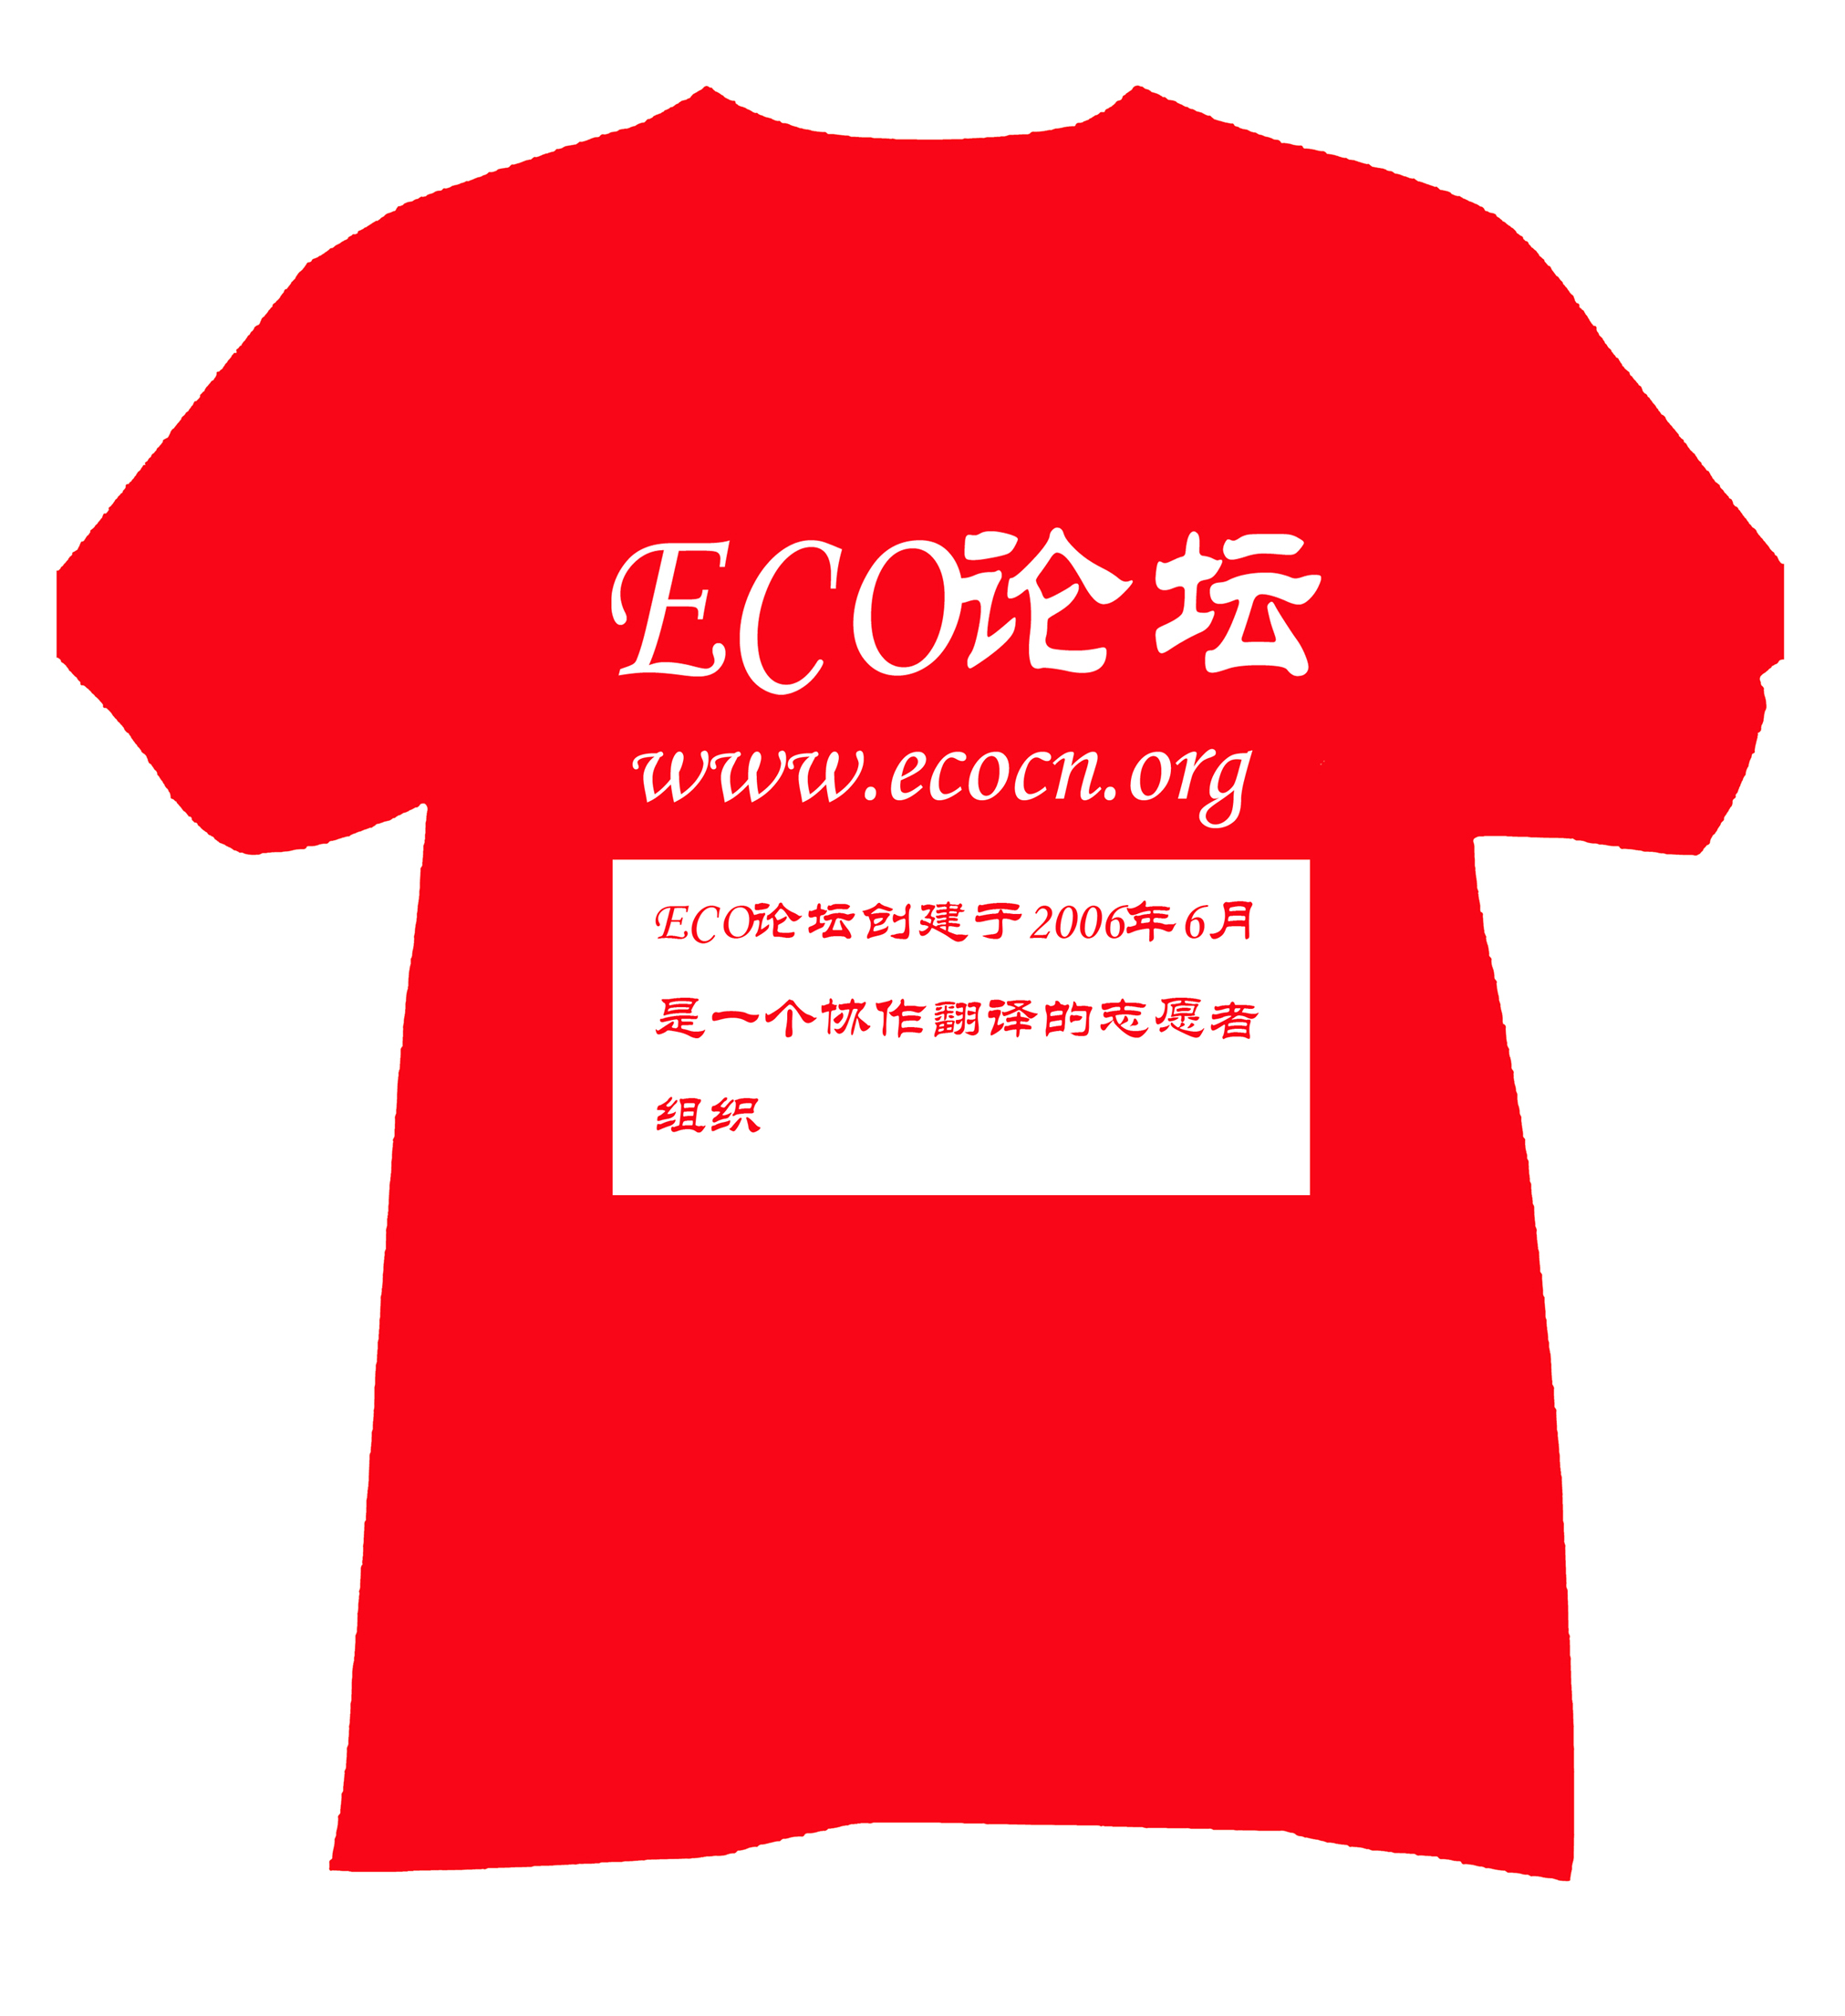 ECO论坛T恤设计_2163306_k68威客网